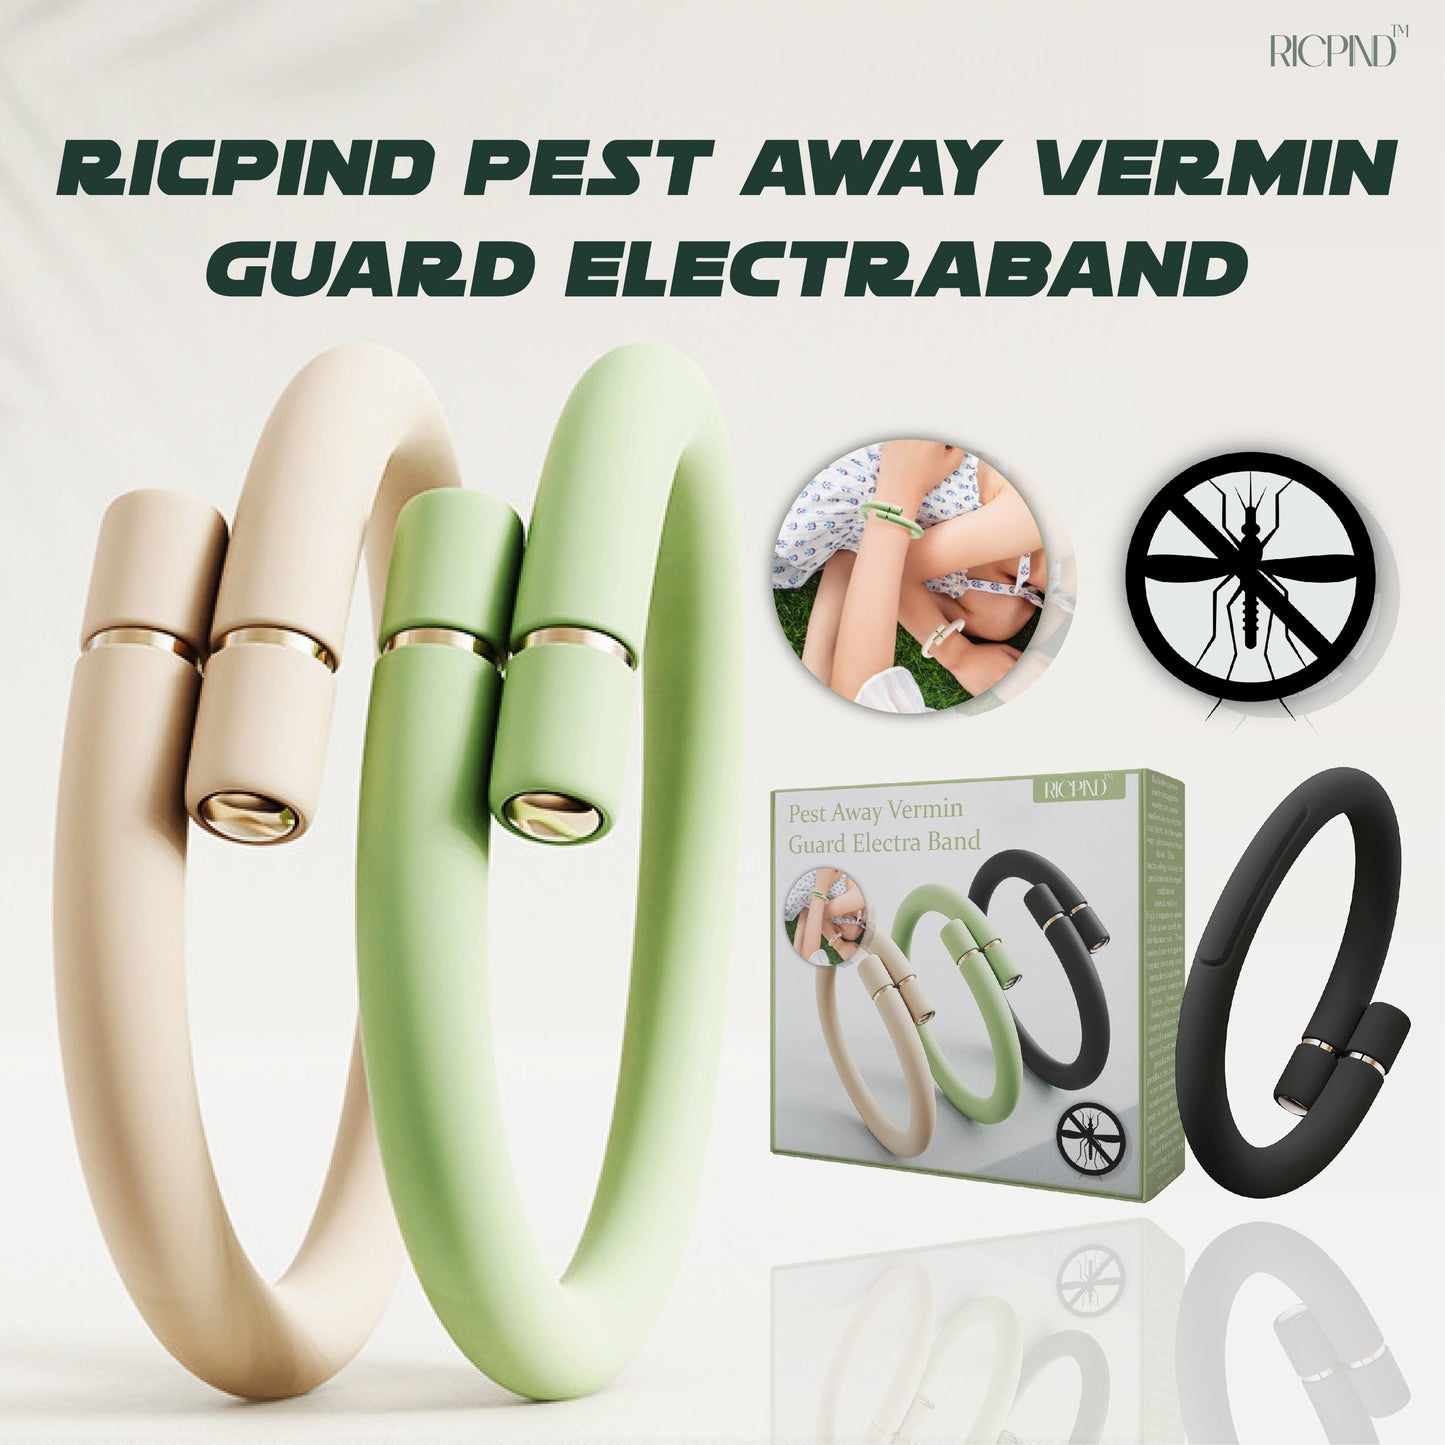 RICPIND Pest Away Vermin Guard ElectraBand